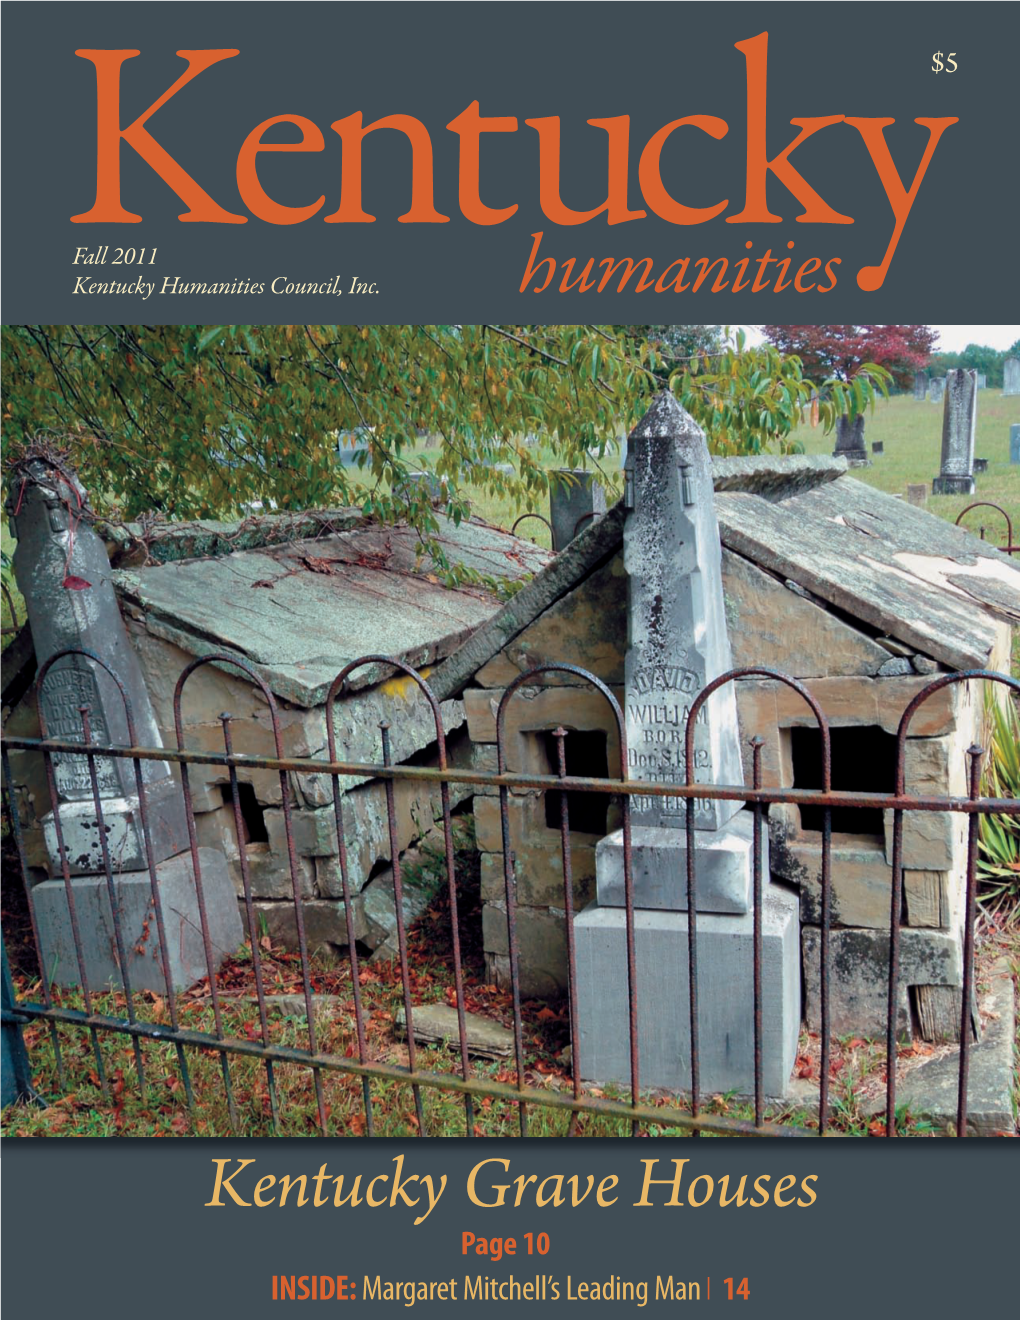 Fall 2011 Kentuckykentucky Humanities Council, Inc